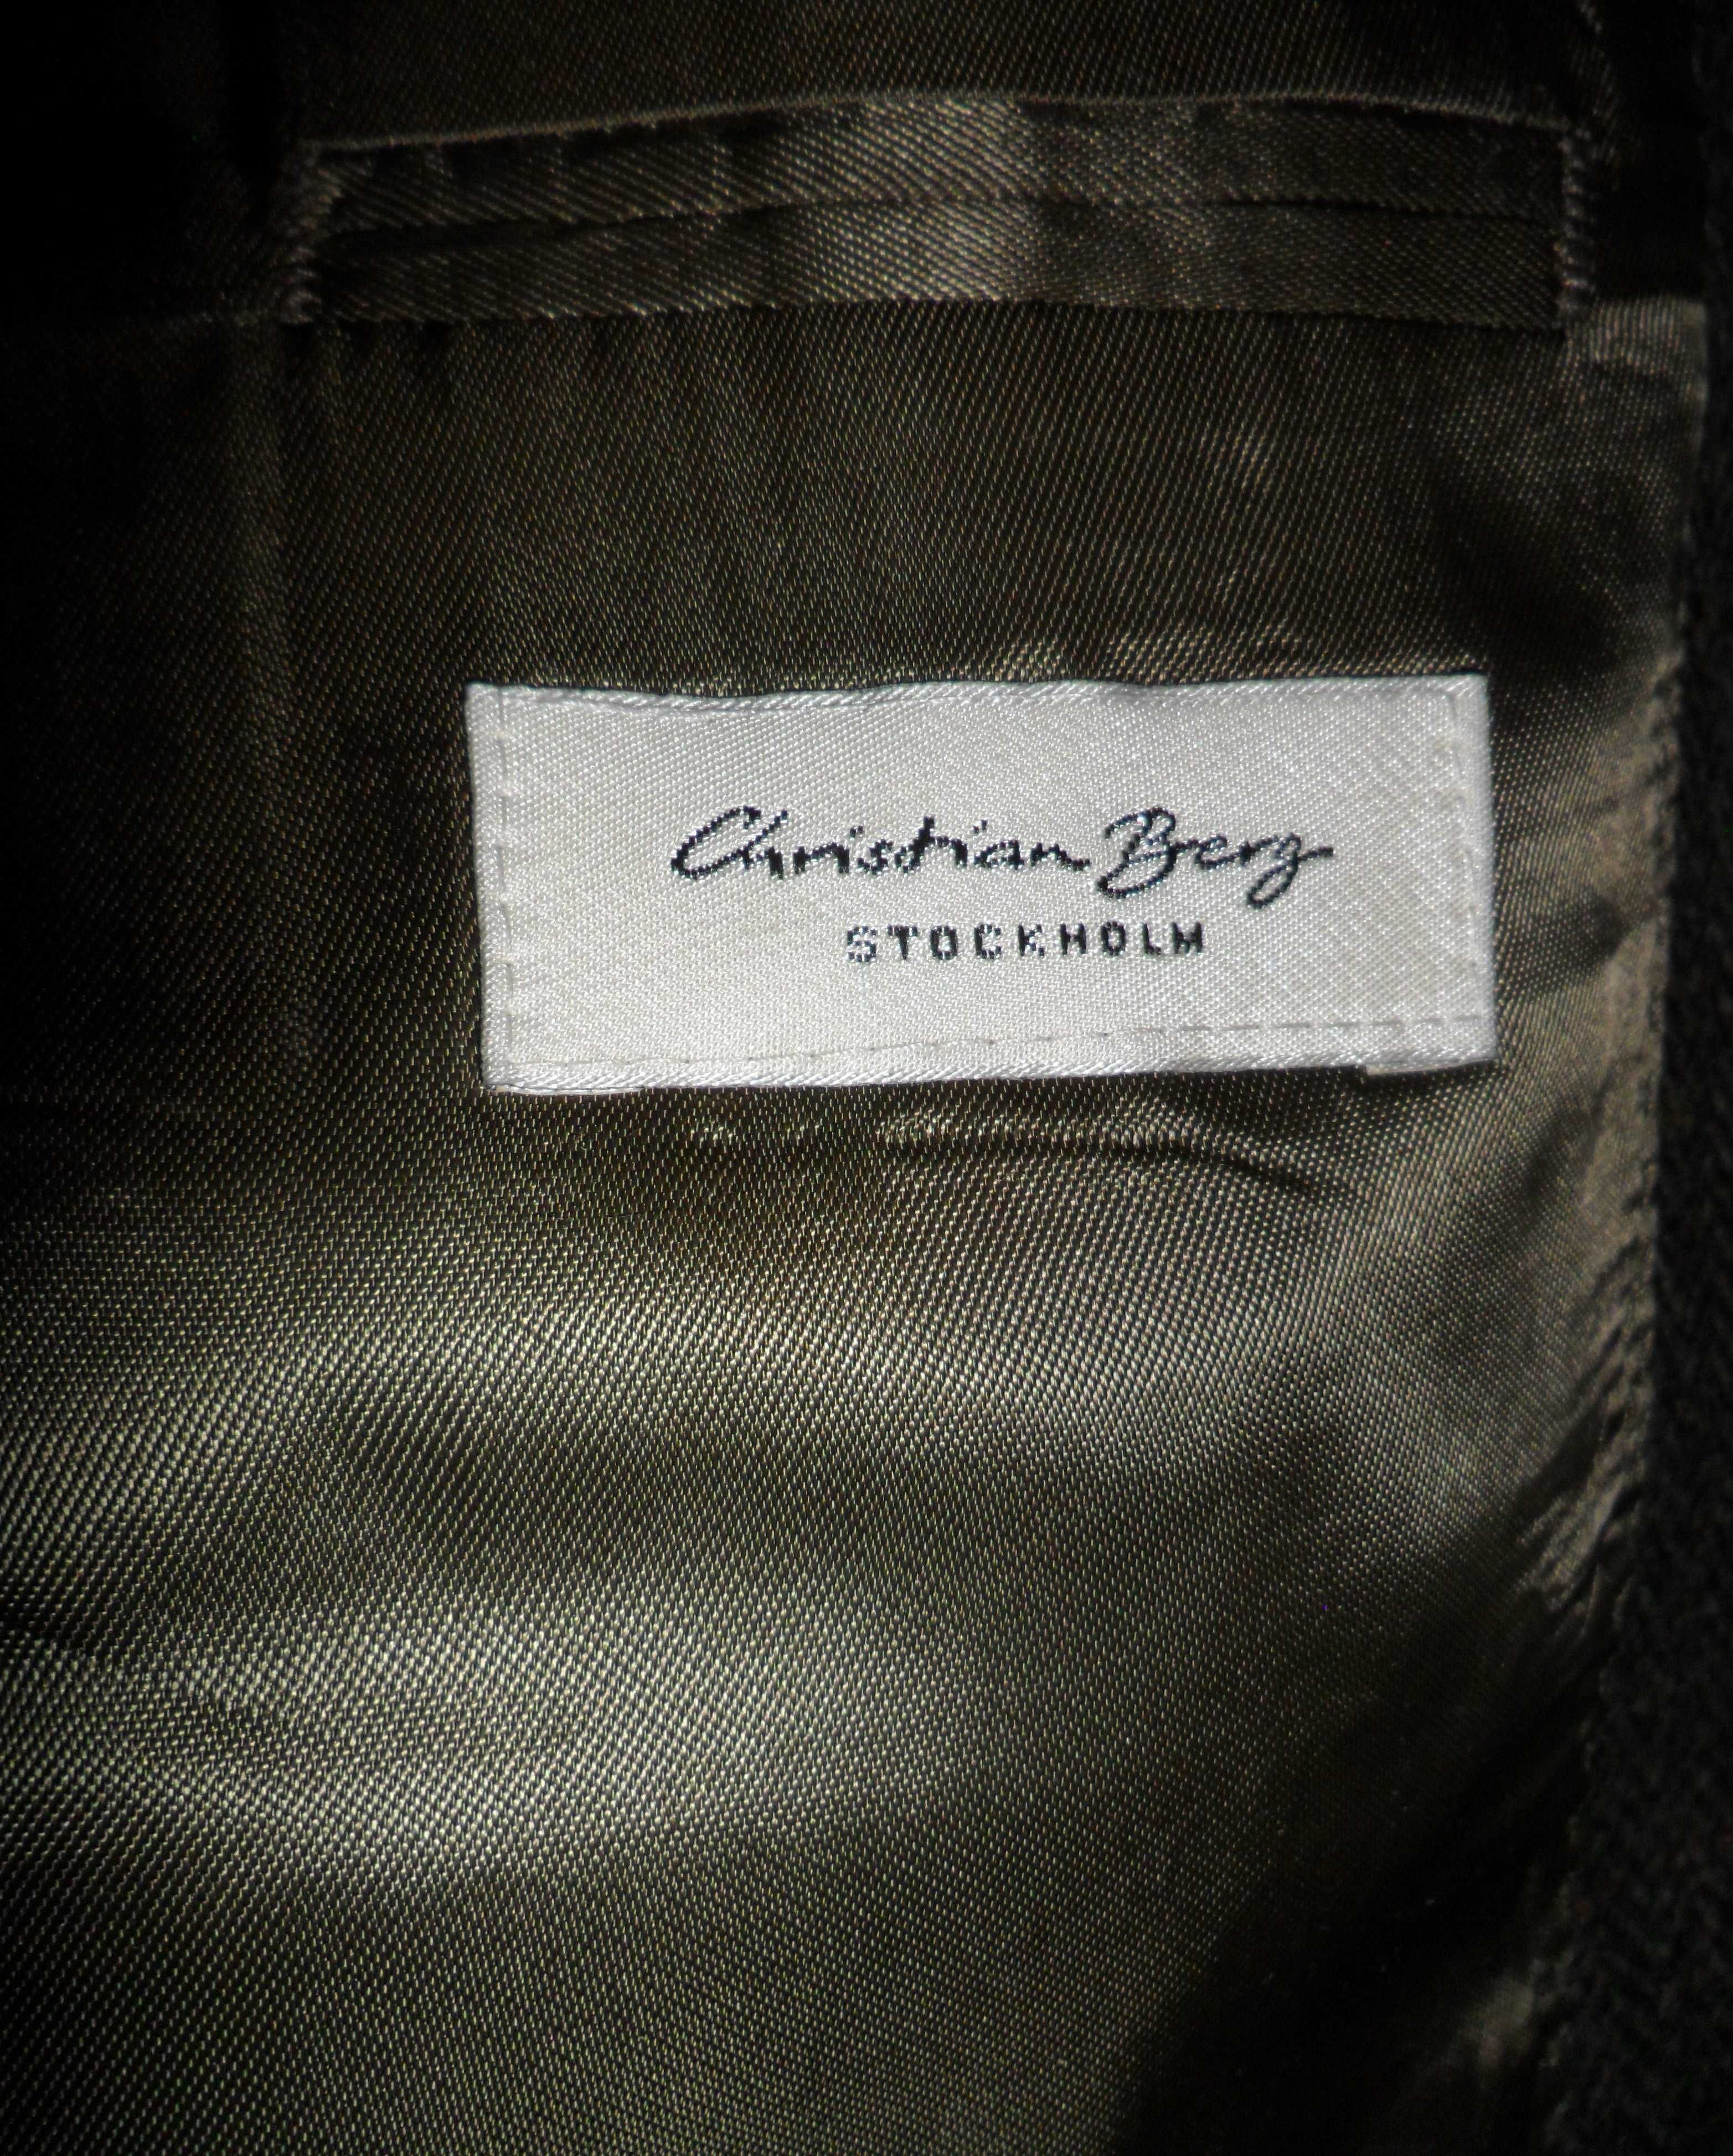 Піджак Christian Berg authentic british tweed by moon, розмір L